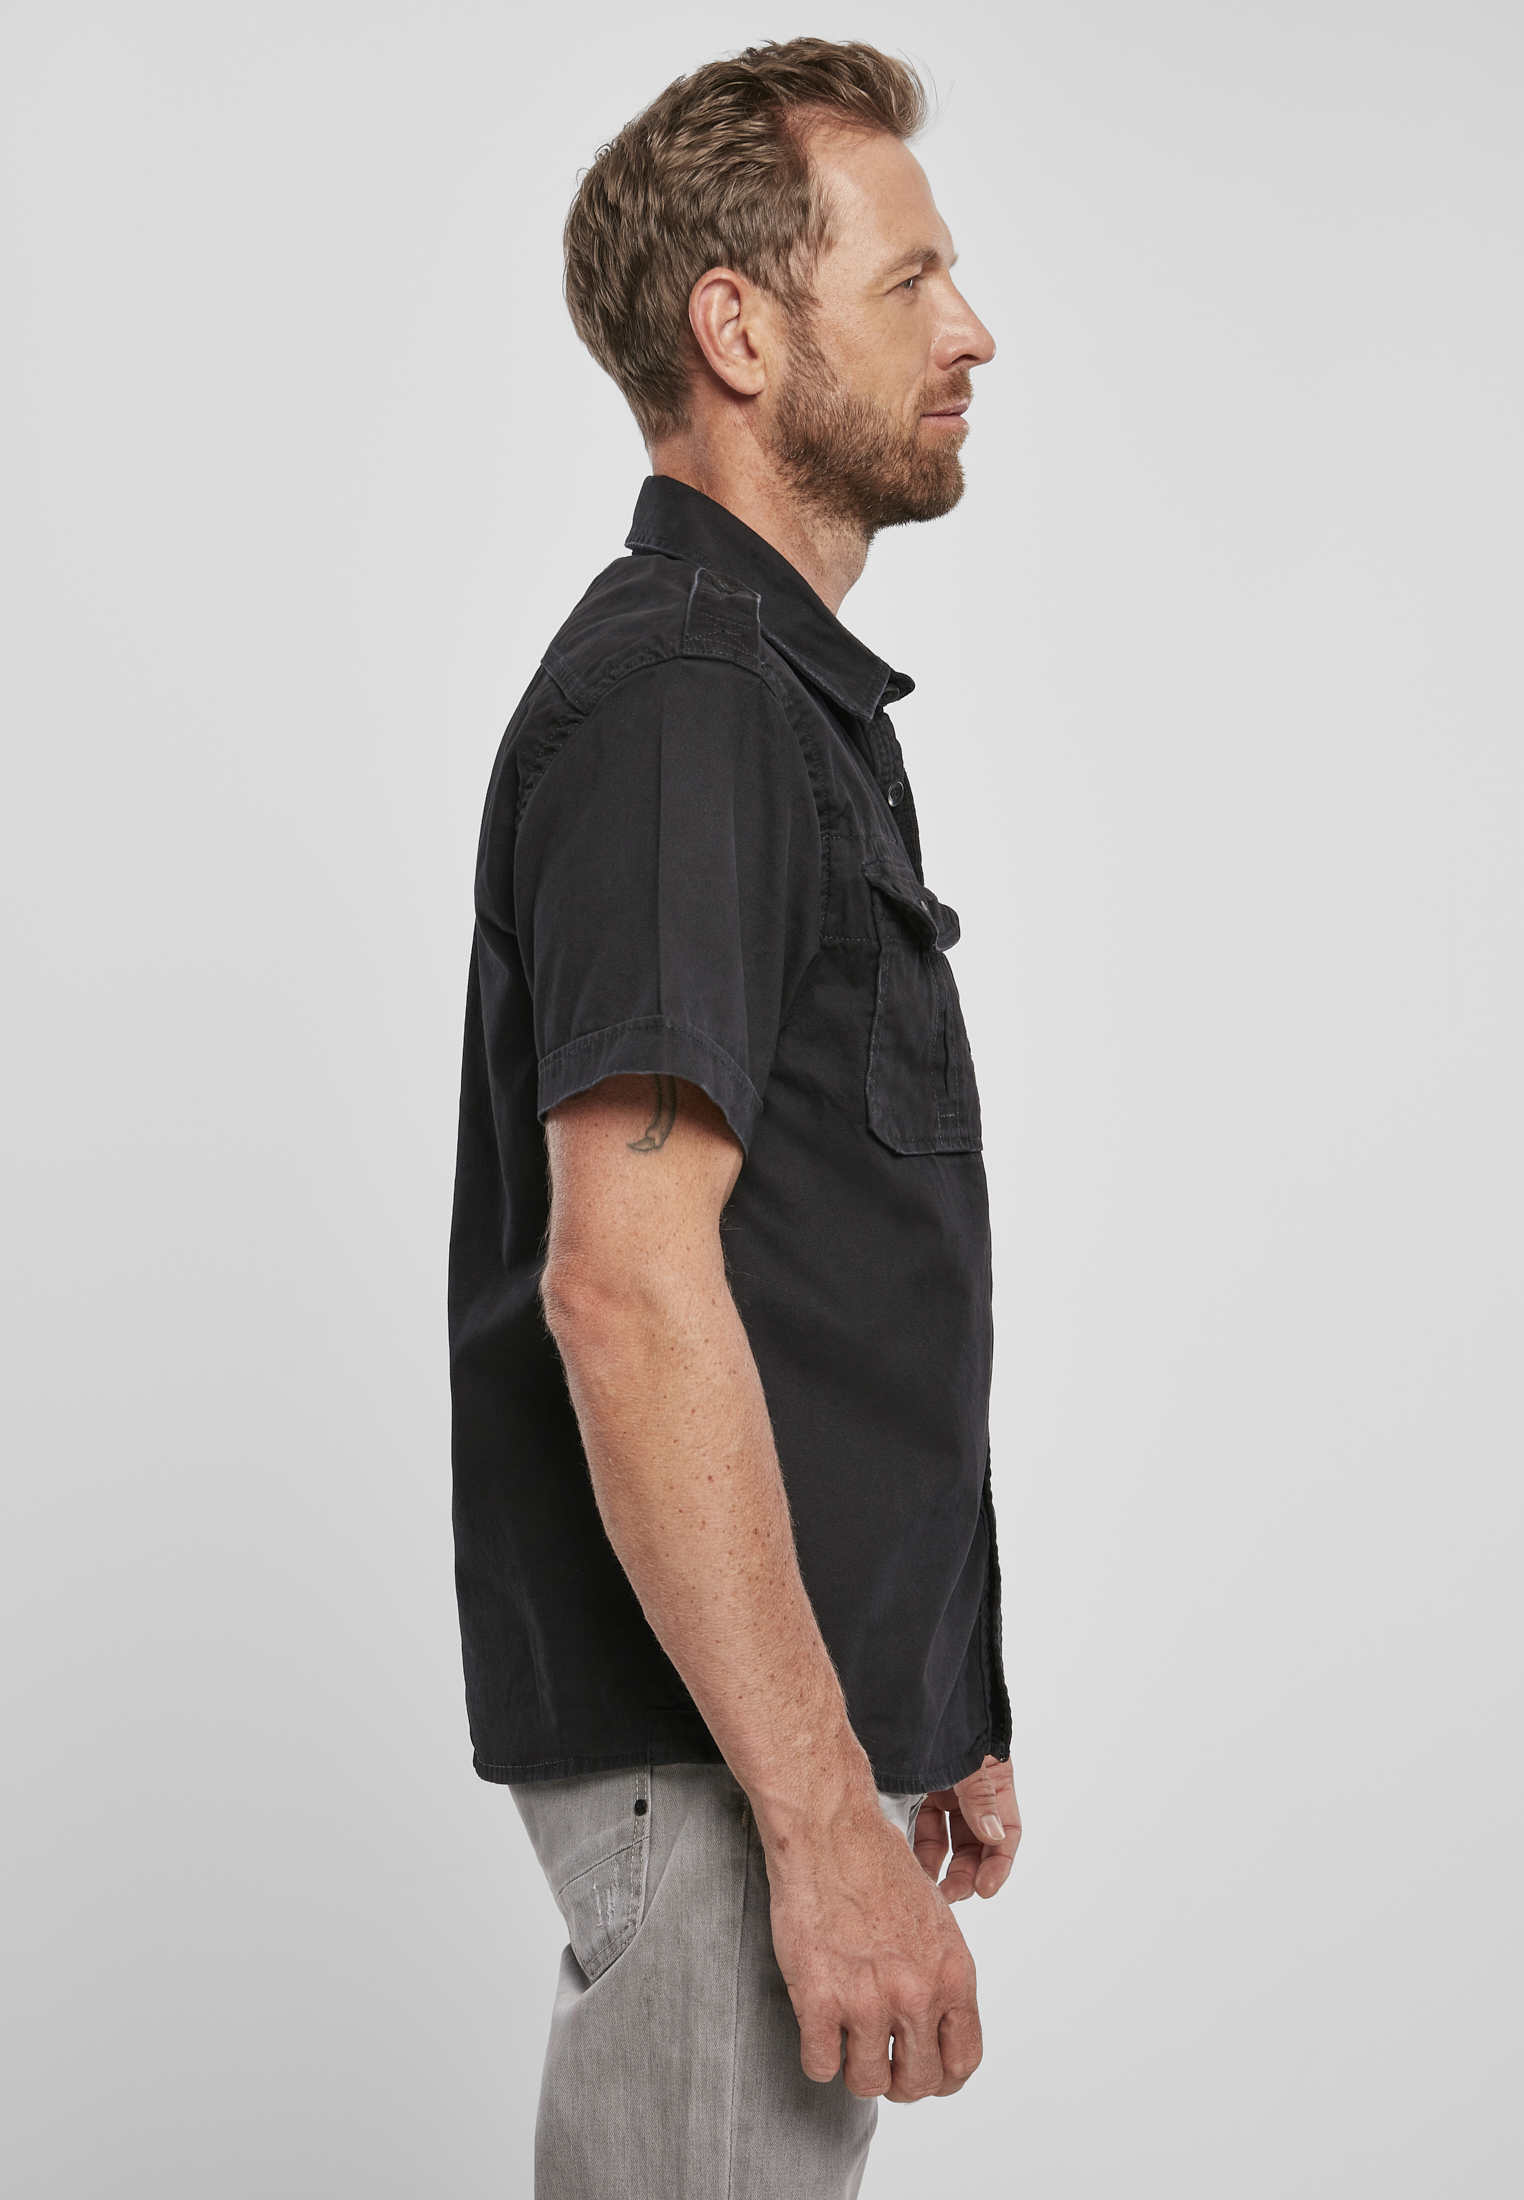 Hemden Vintage Shirt shortsleeve in Farbe black